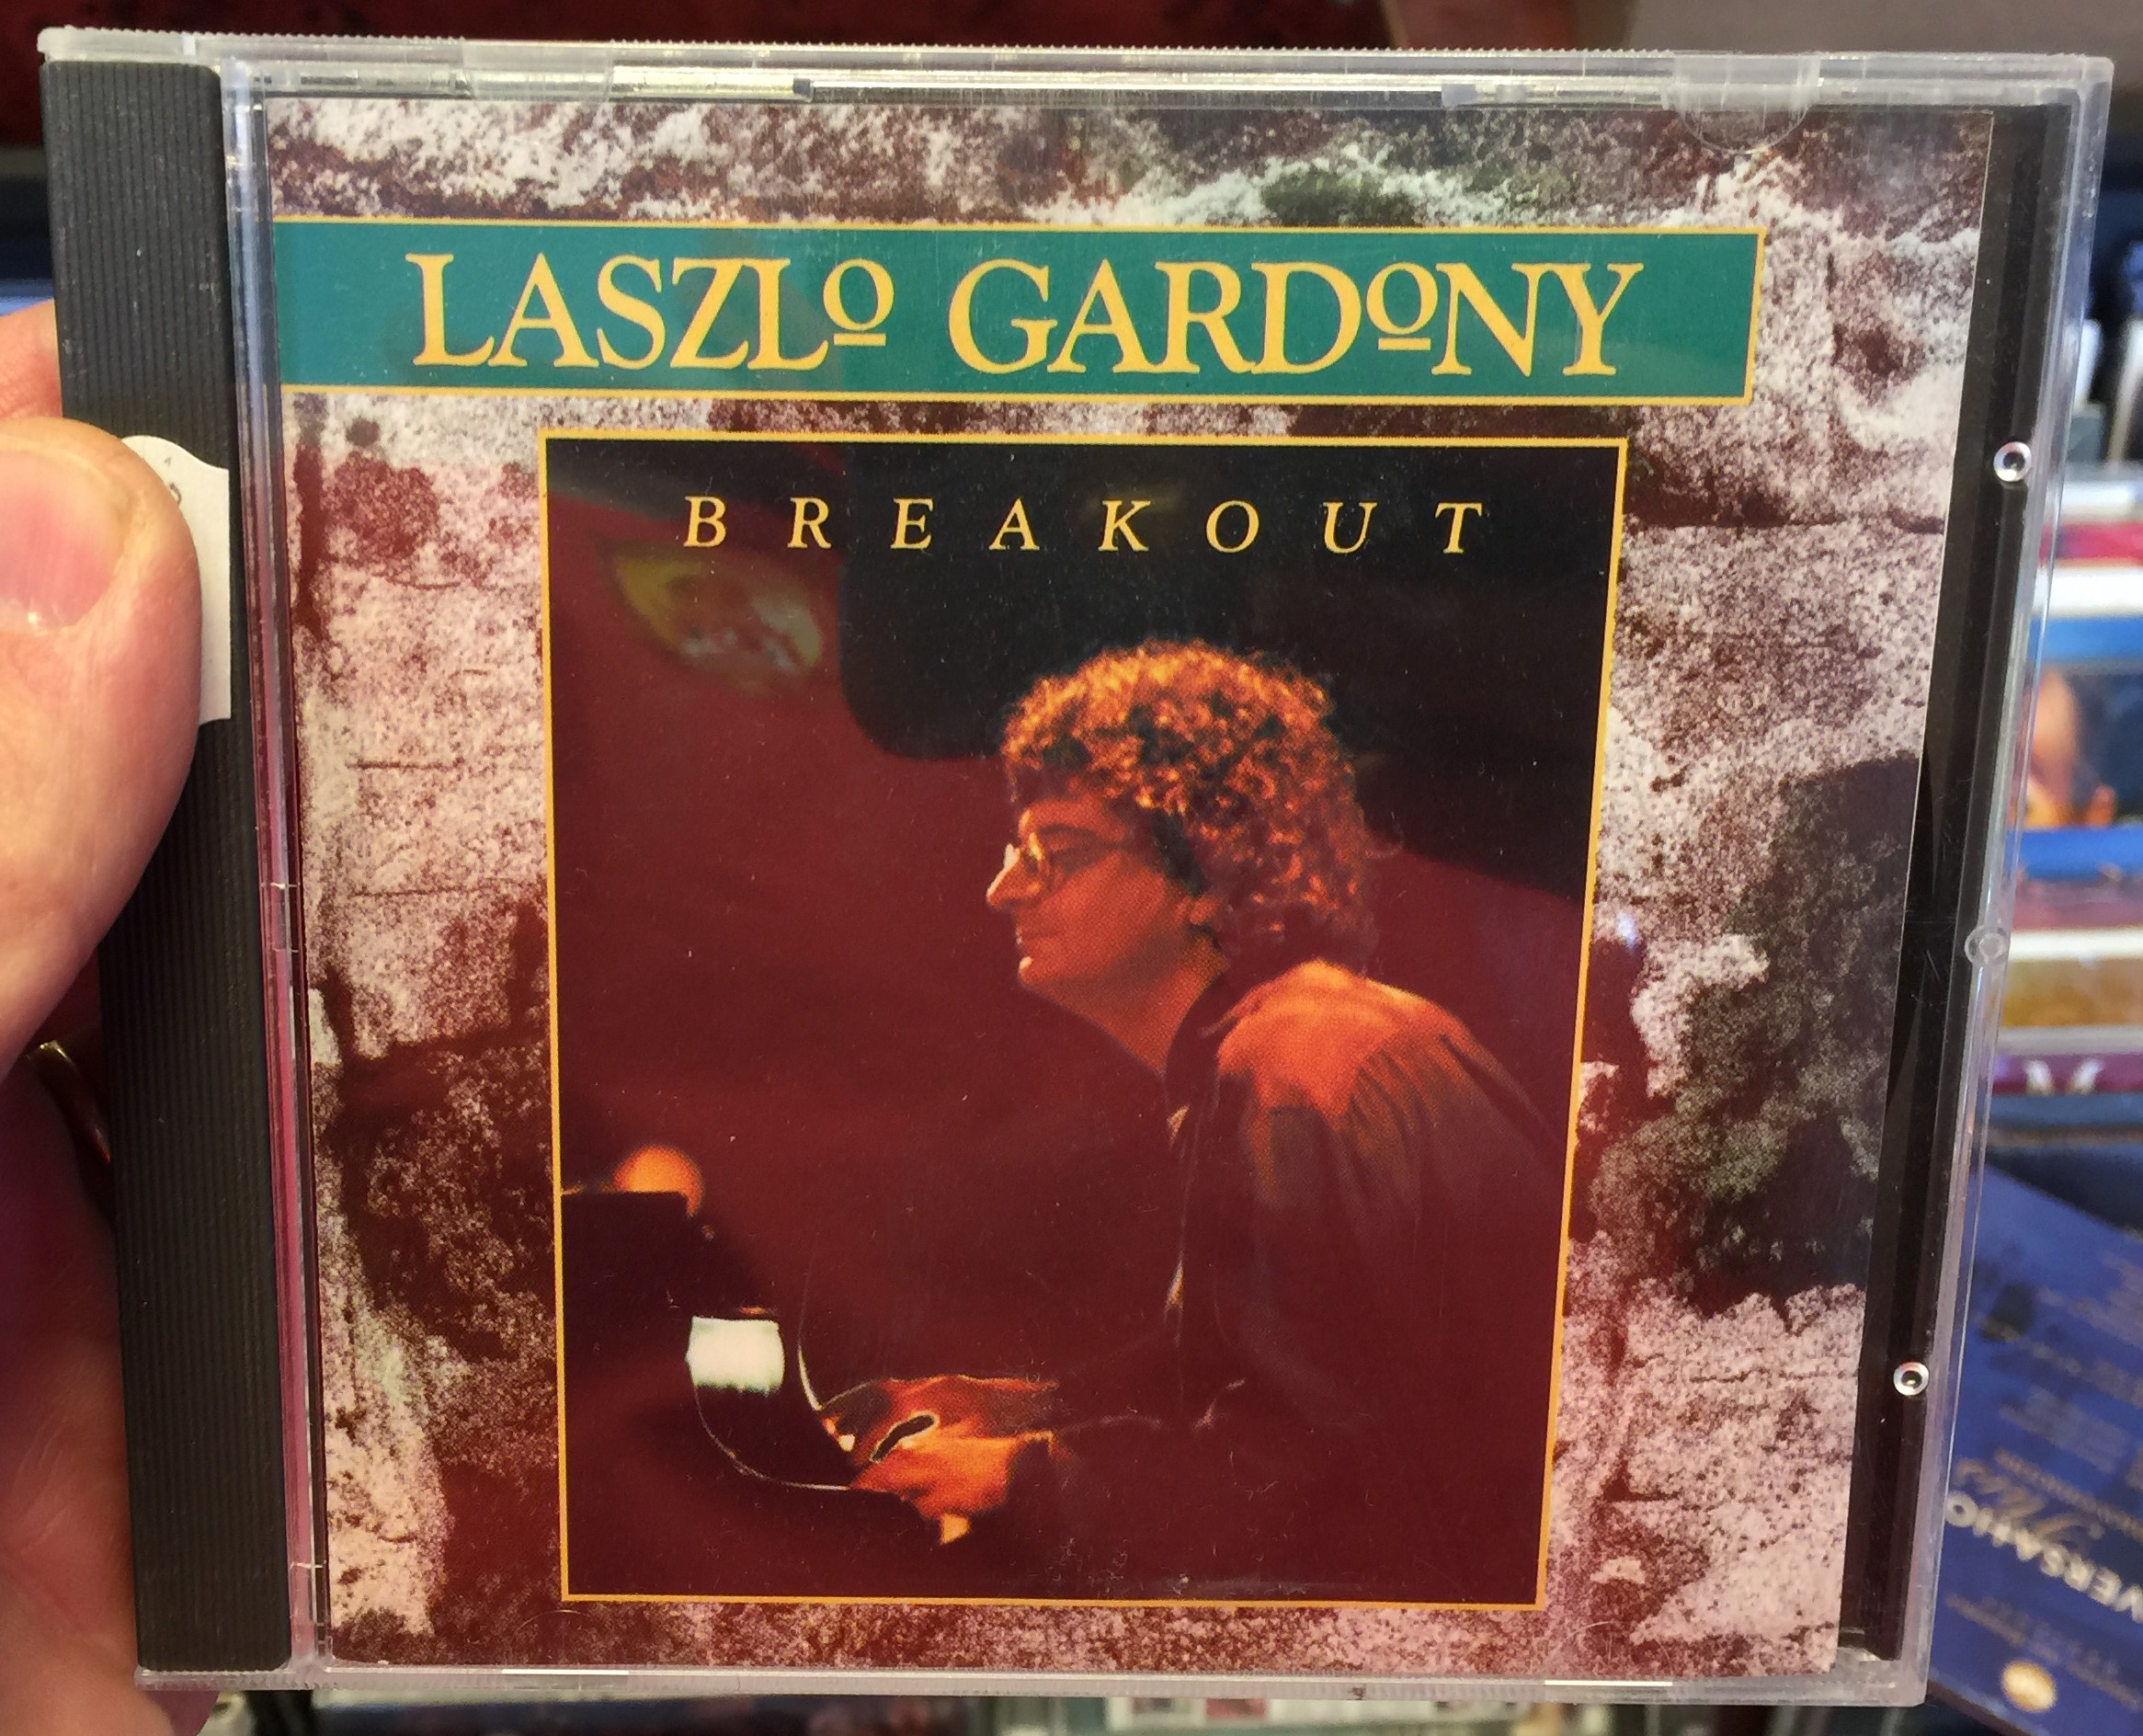 laszlo-gardony-breakout-arg-jazz-audio-cd-1994-74321-37887-2-1-.jpg